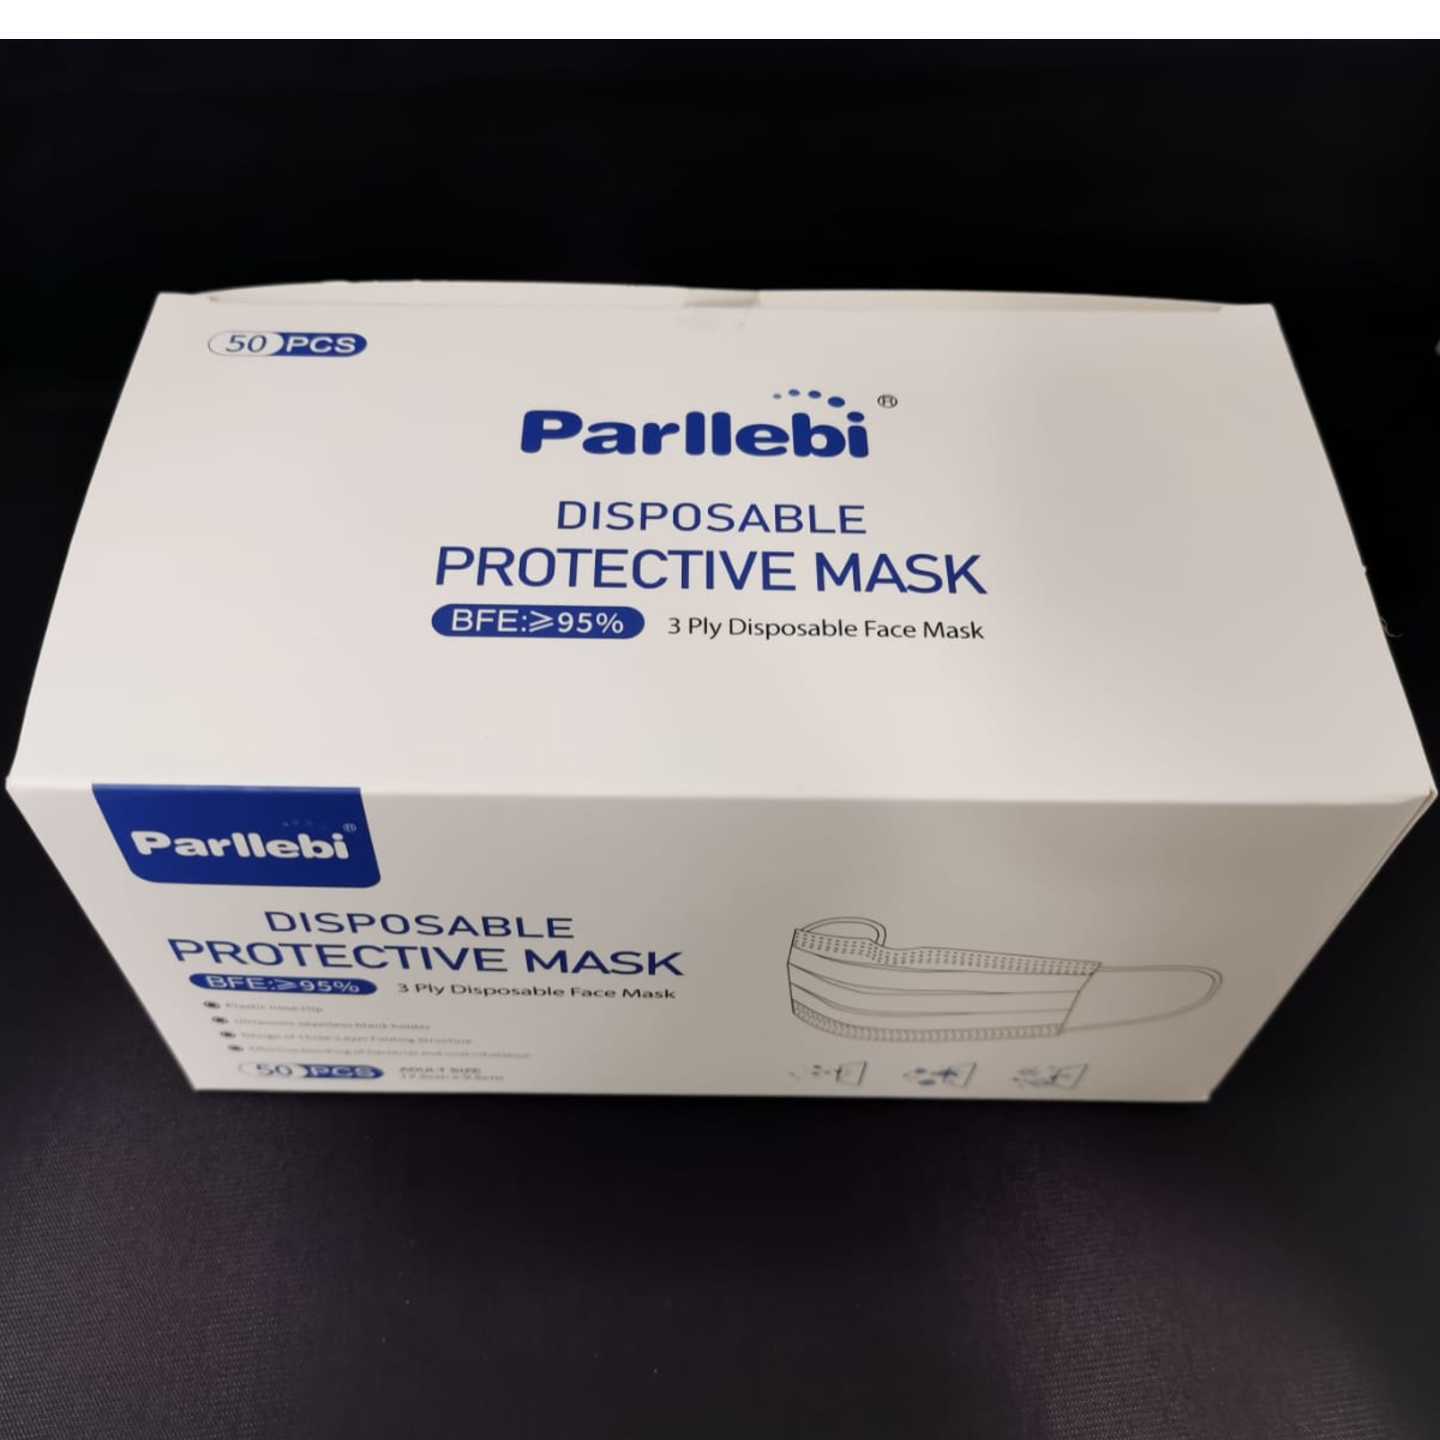 Parllebi Disposable Protective Mask